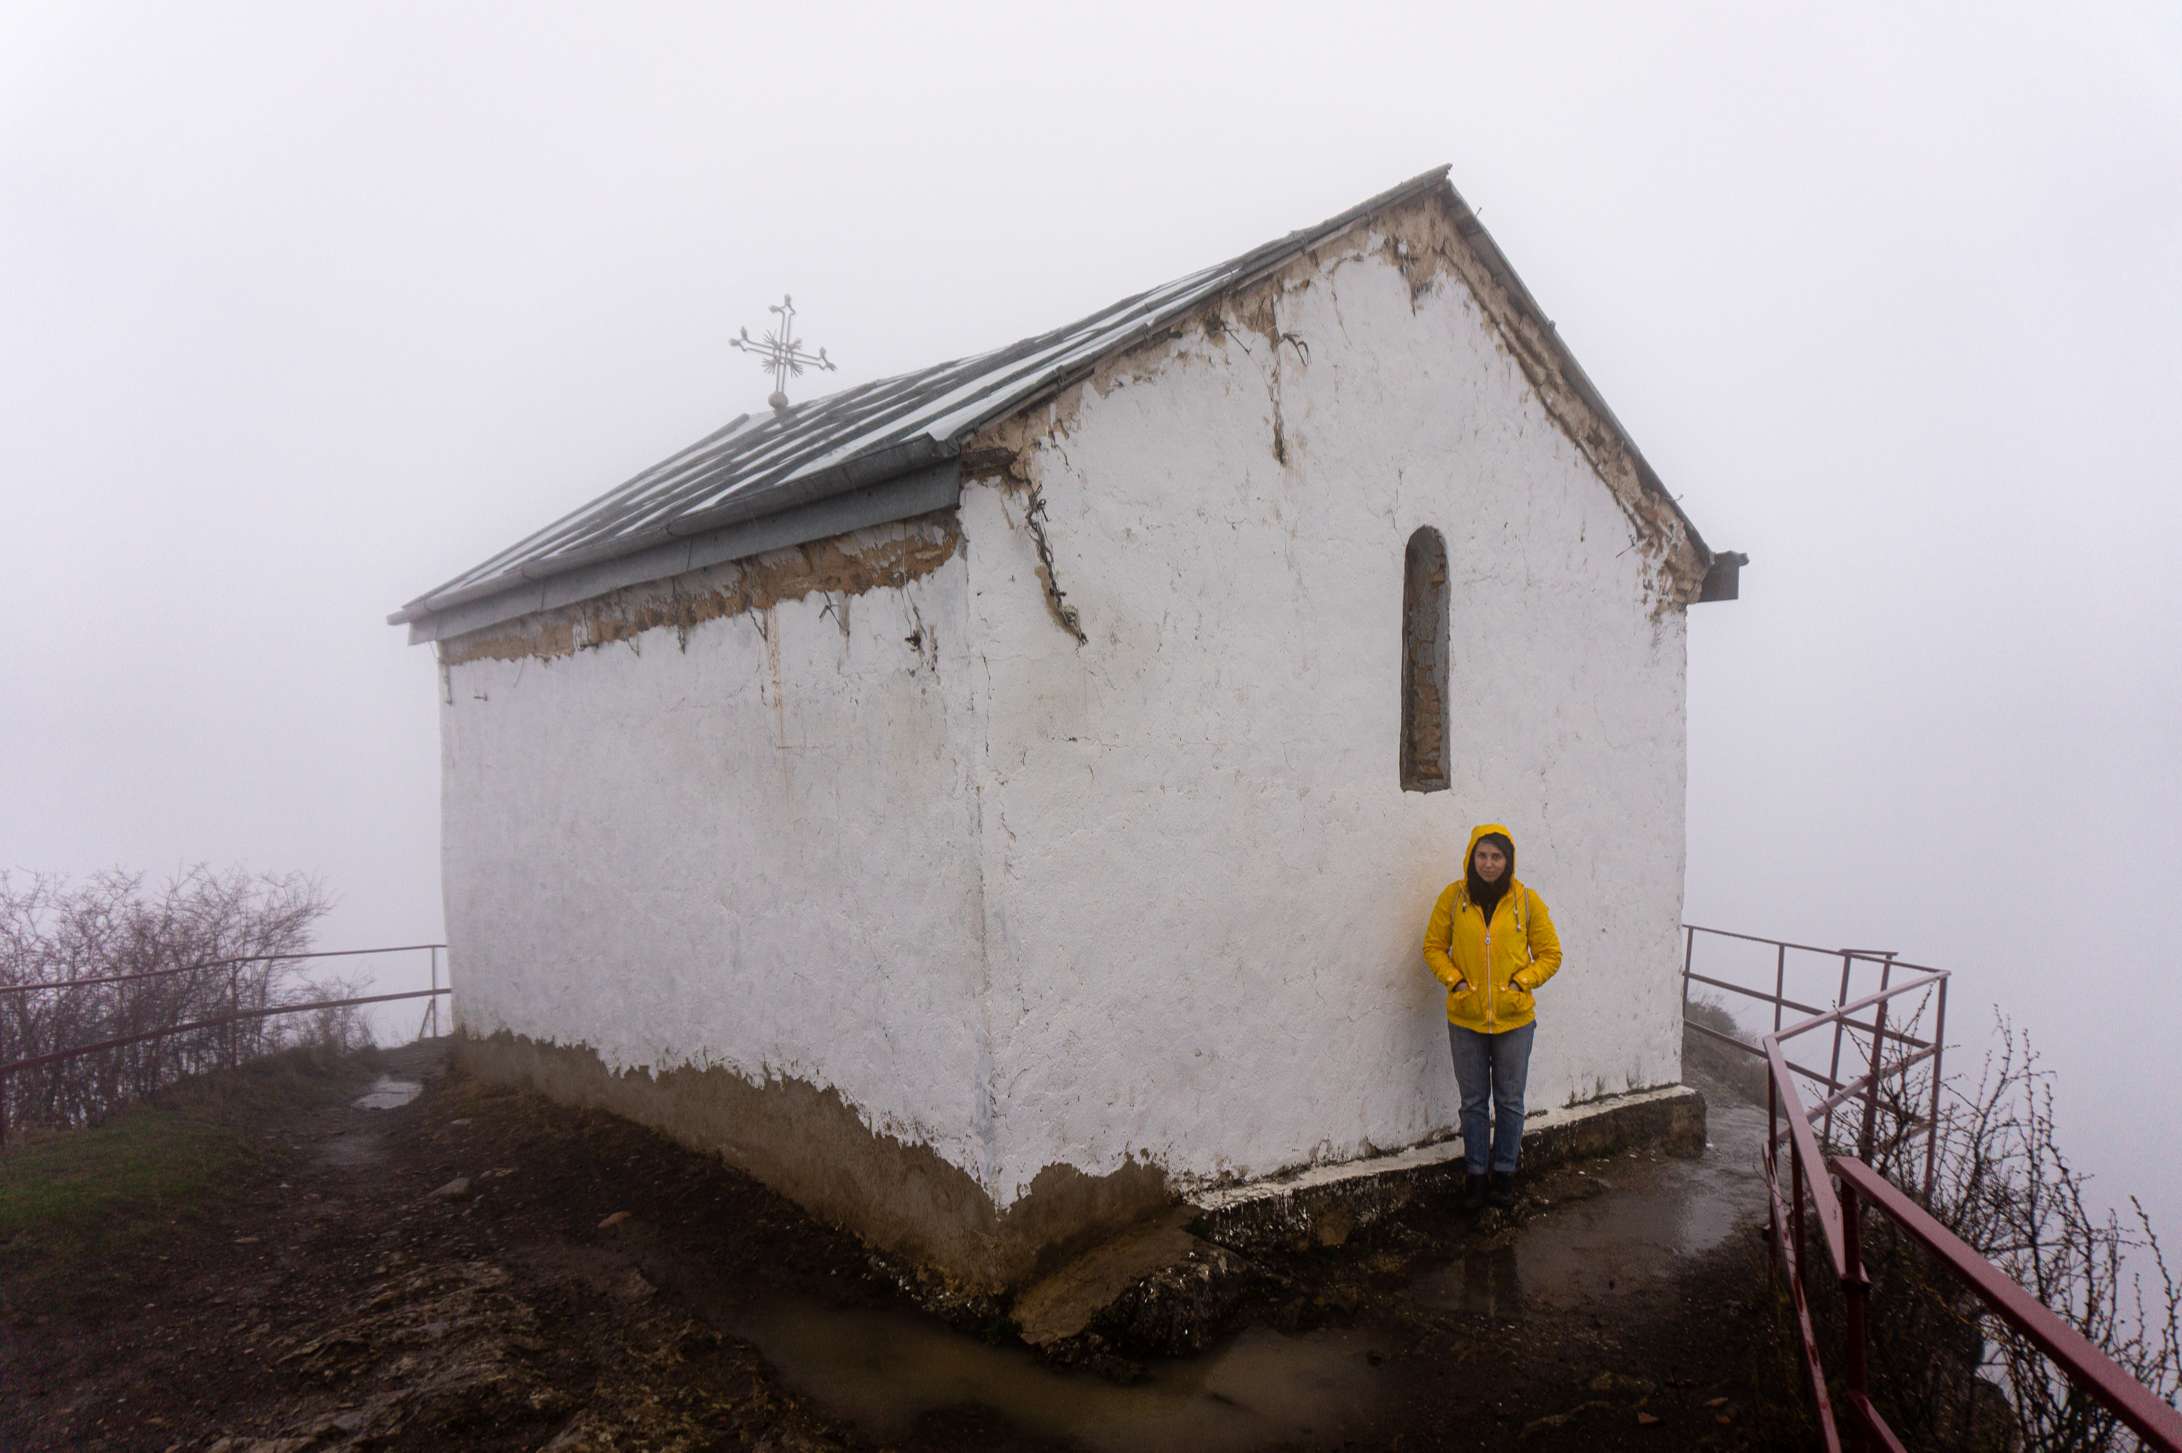 Caroline standing next to Tsveri church in the thick fog